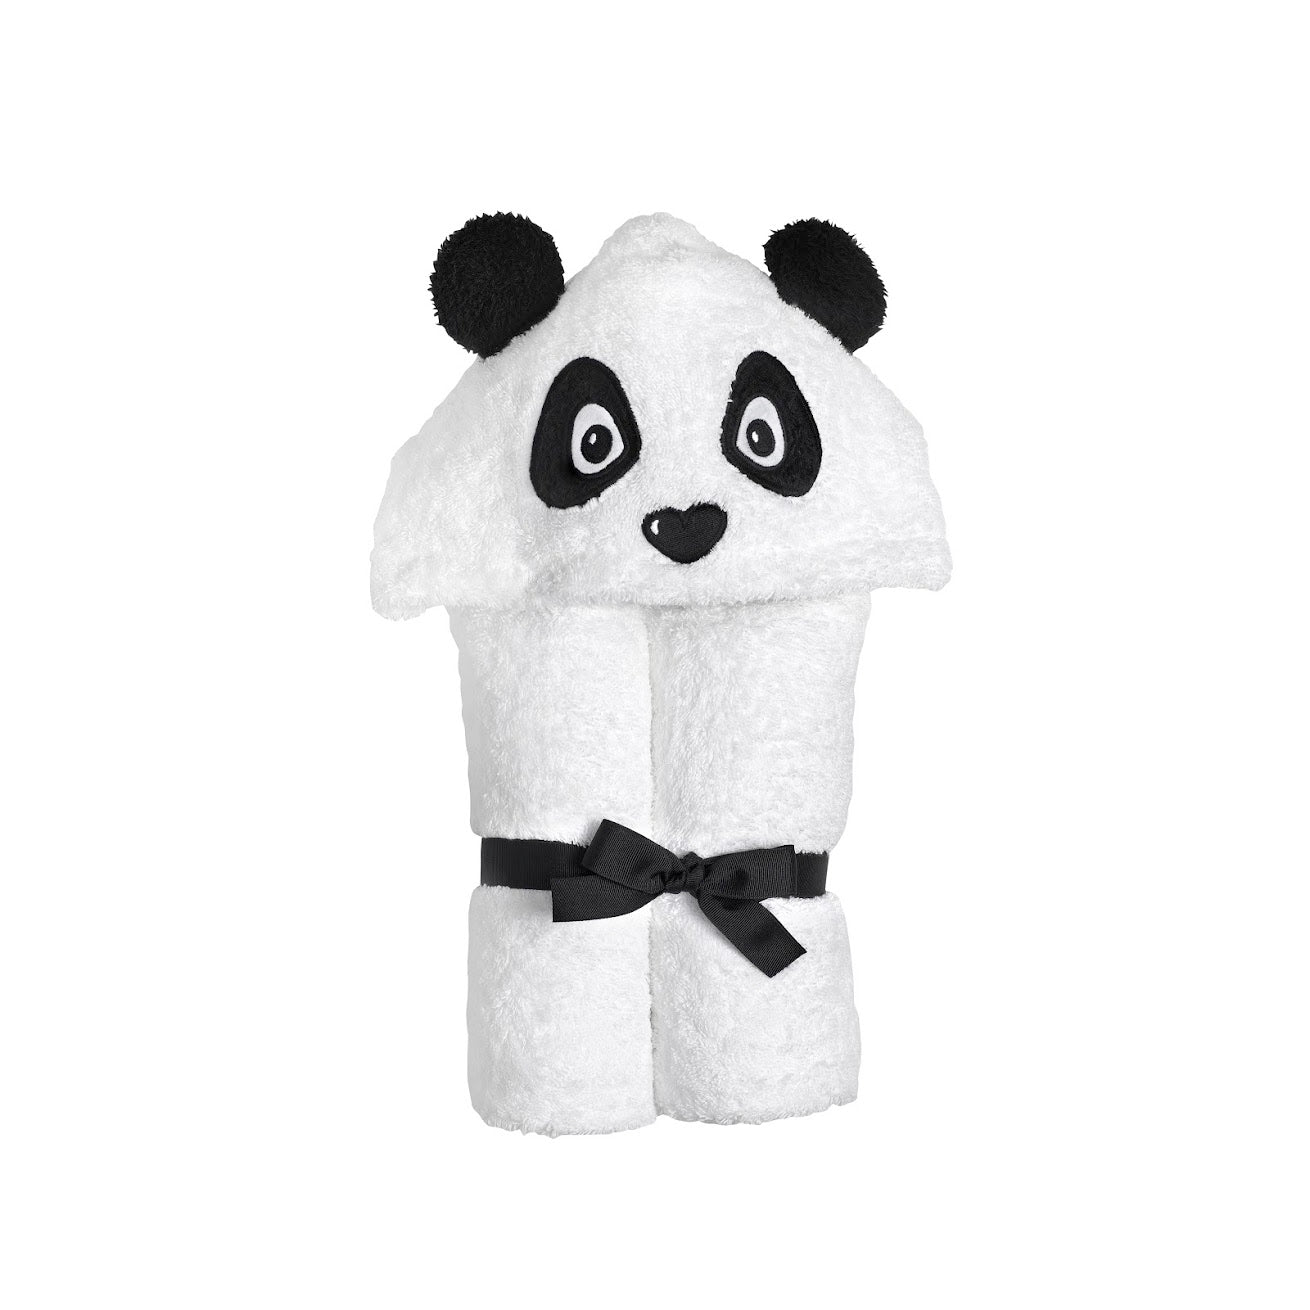 Personalized Hooded Towel- Panda